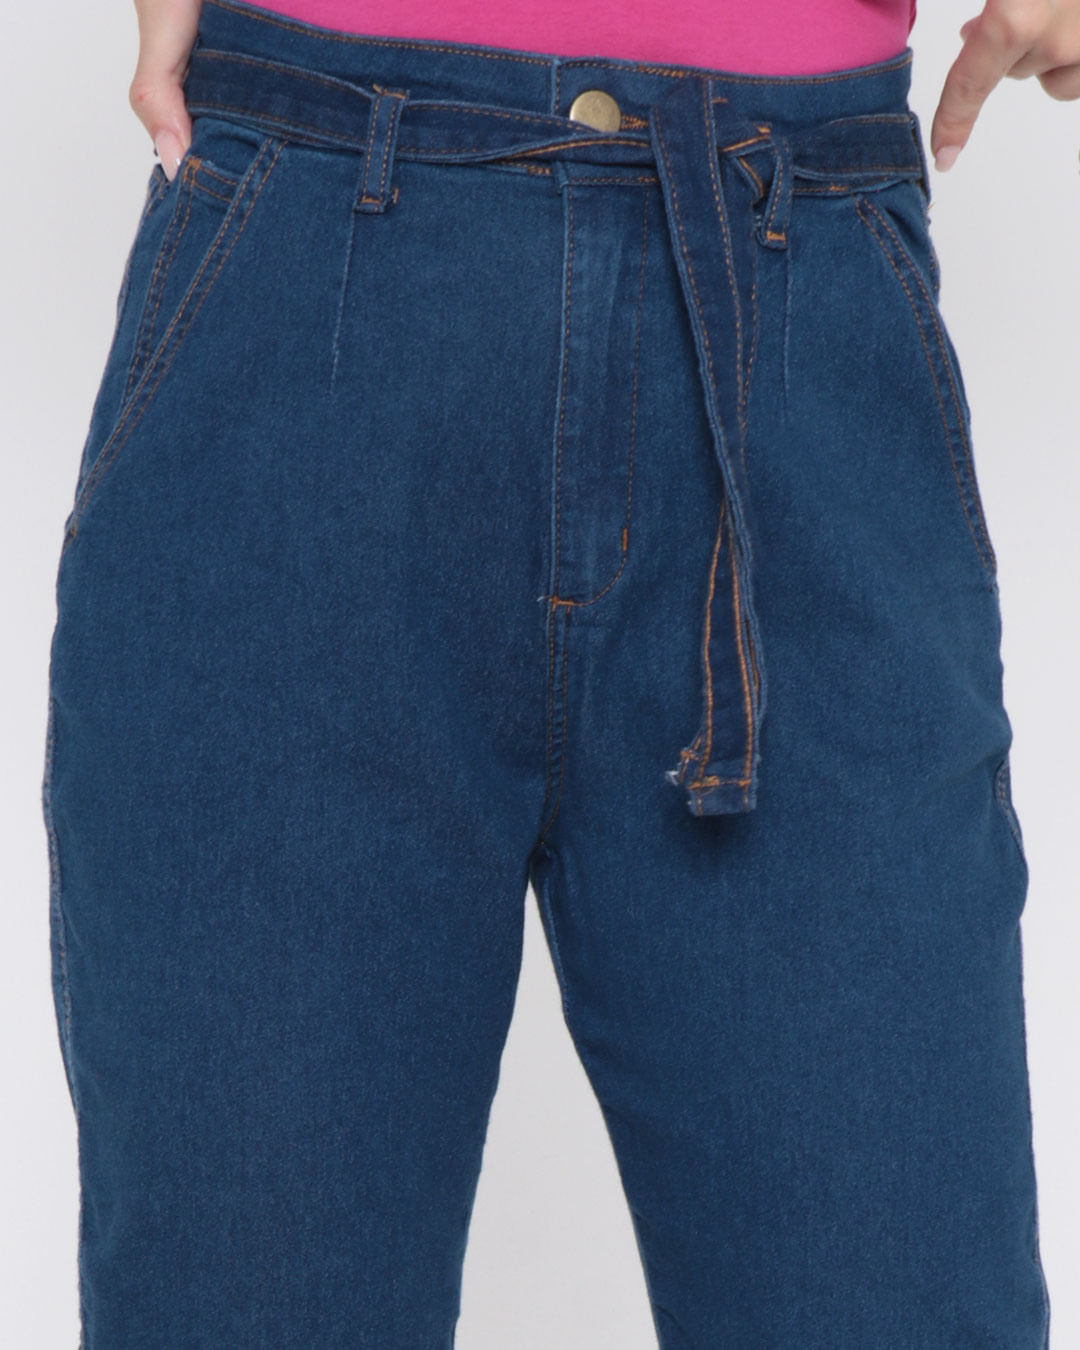 13121001222045-blue-jeans-medio-4